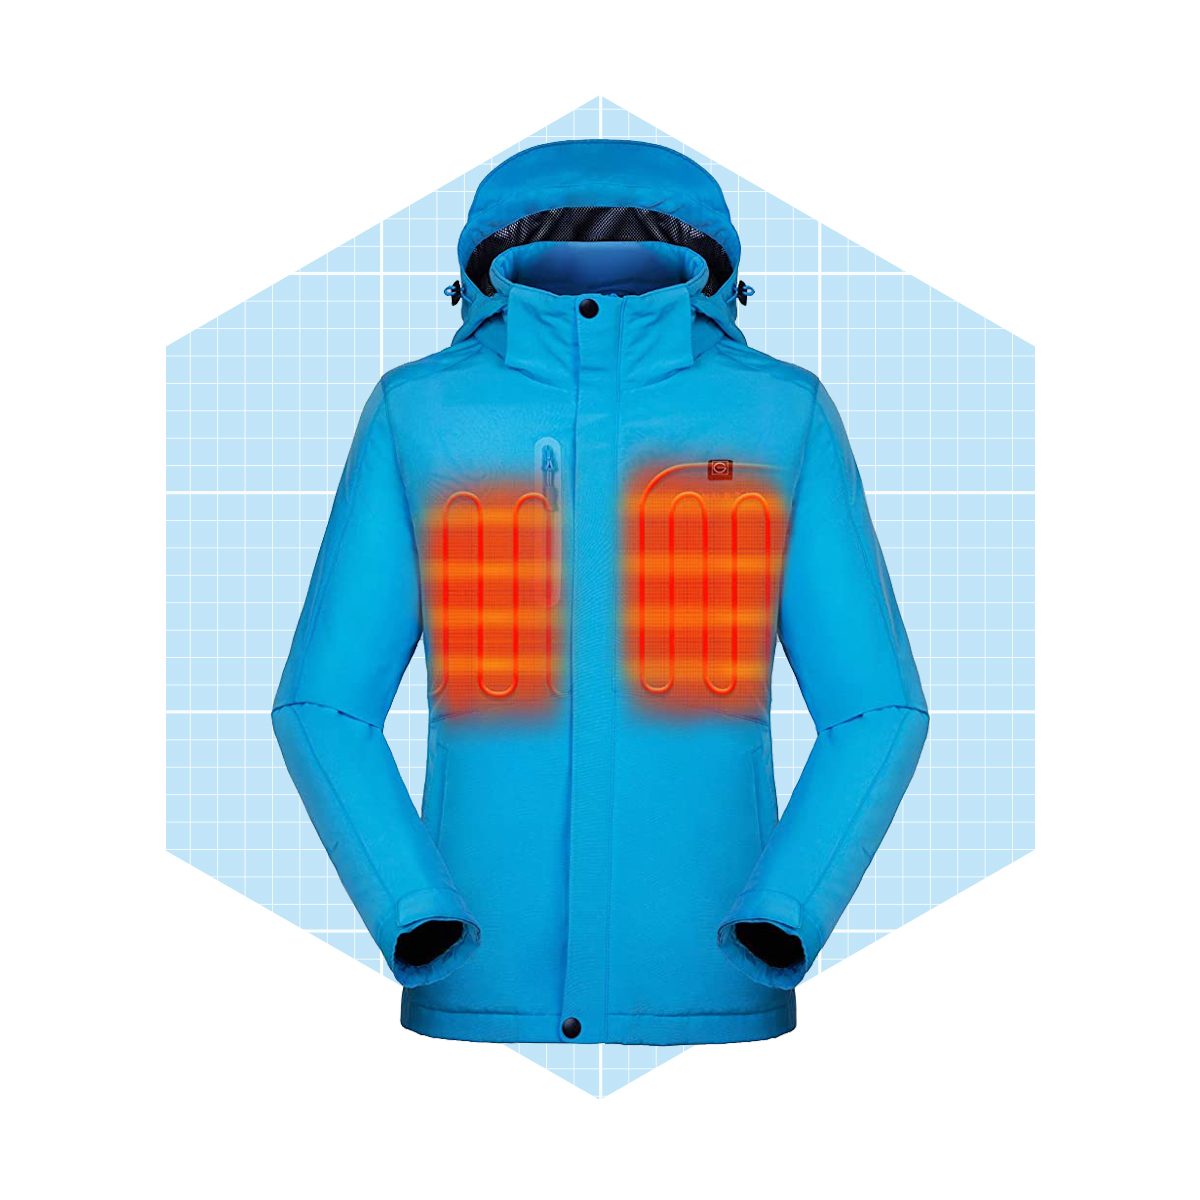 Venustas Women's Heated Jacket With Battery Pack 5v, Heated Coat With Detachable Hood Windproof Ecomm Amazon.com